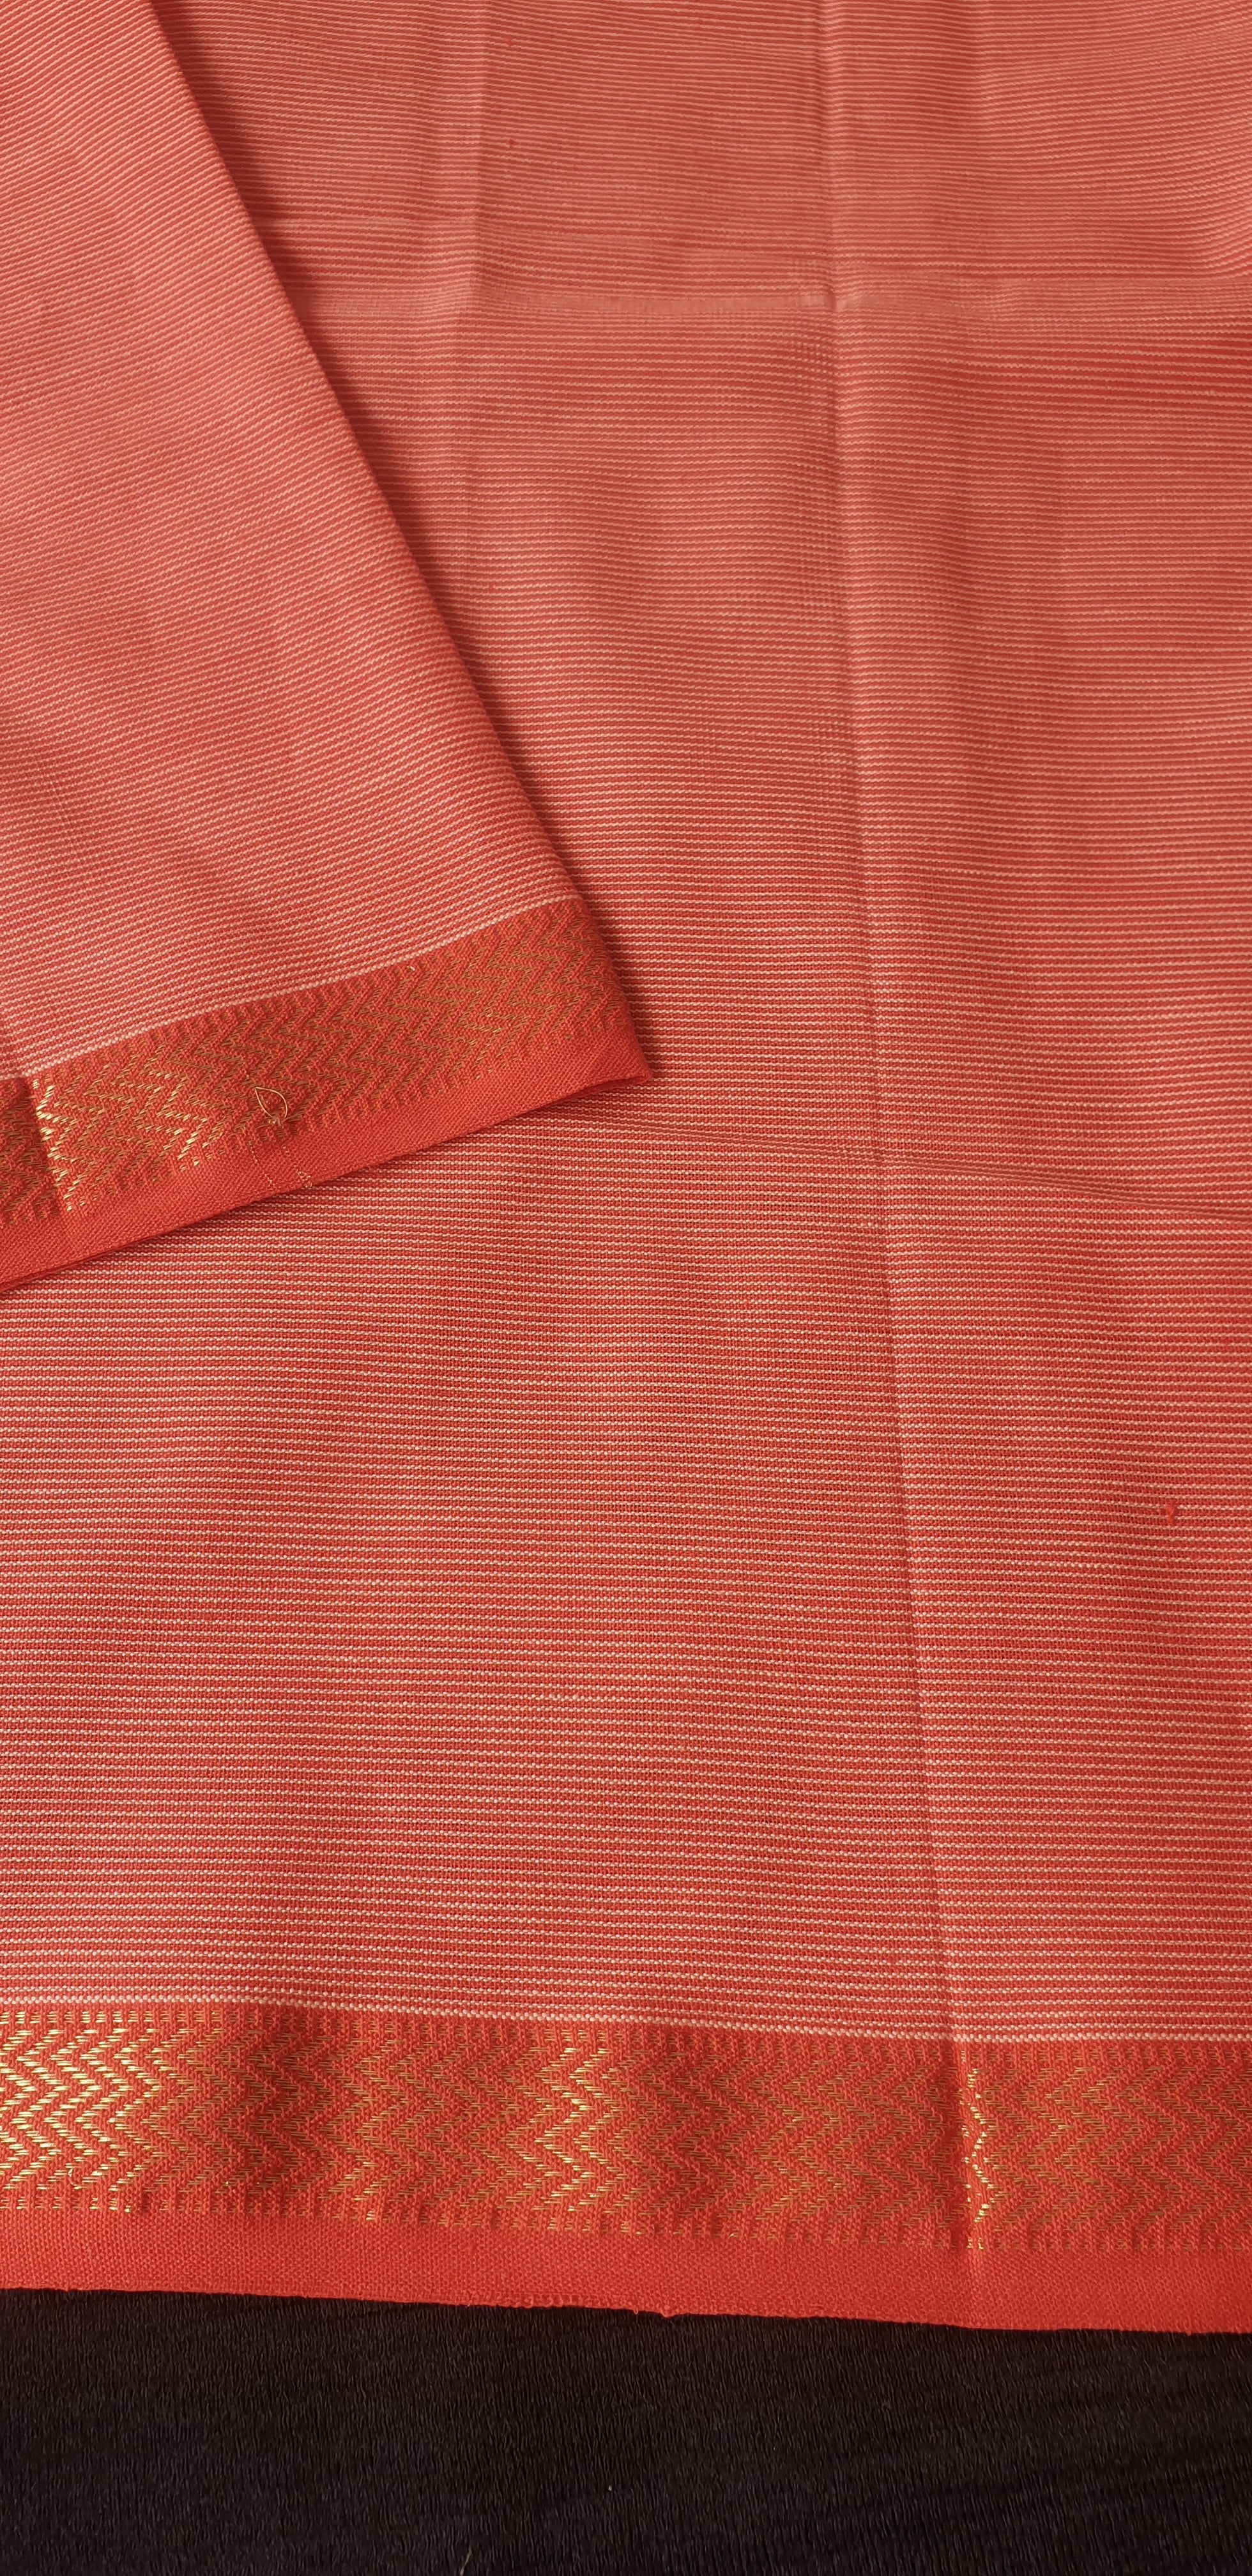 Pin Stripe Kurta piece in pure Cotton with Orange Borders.